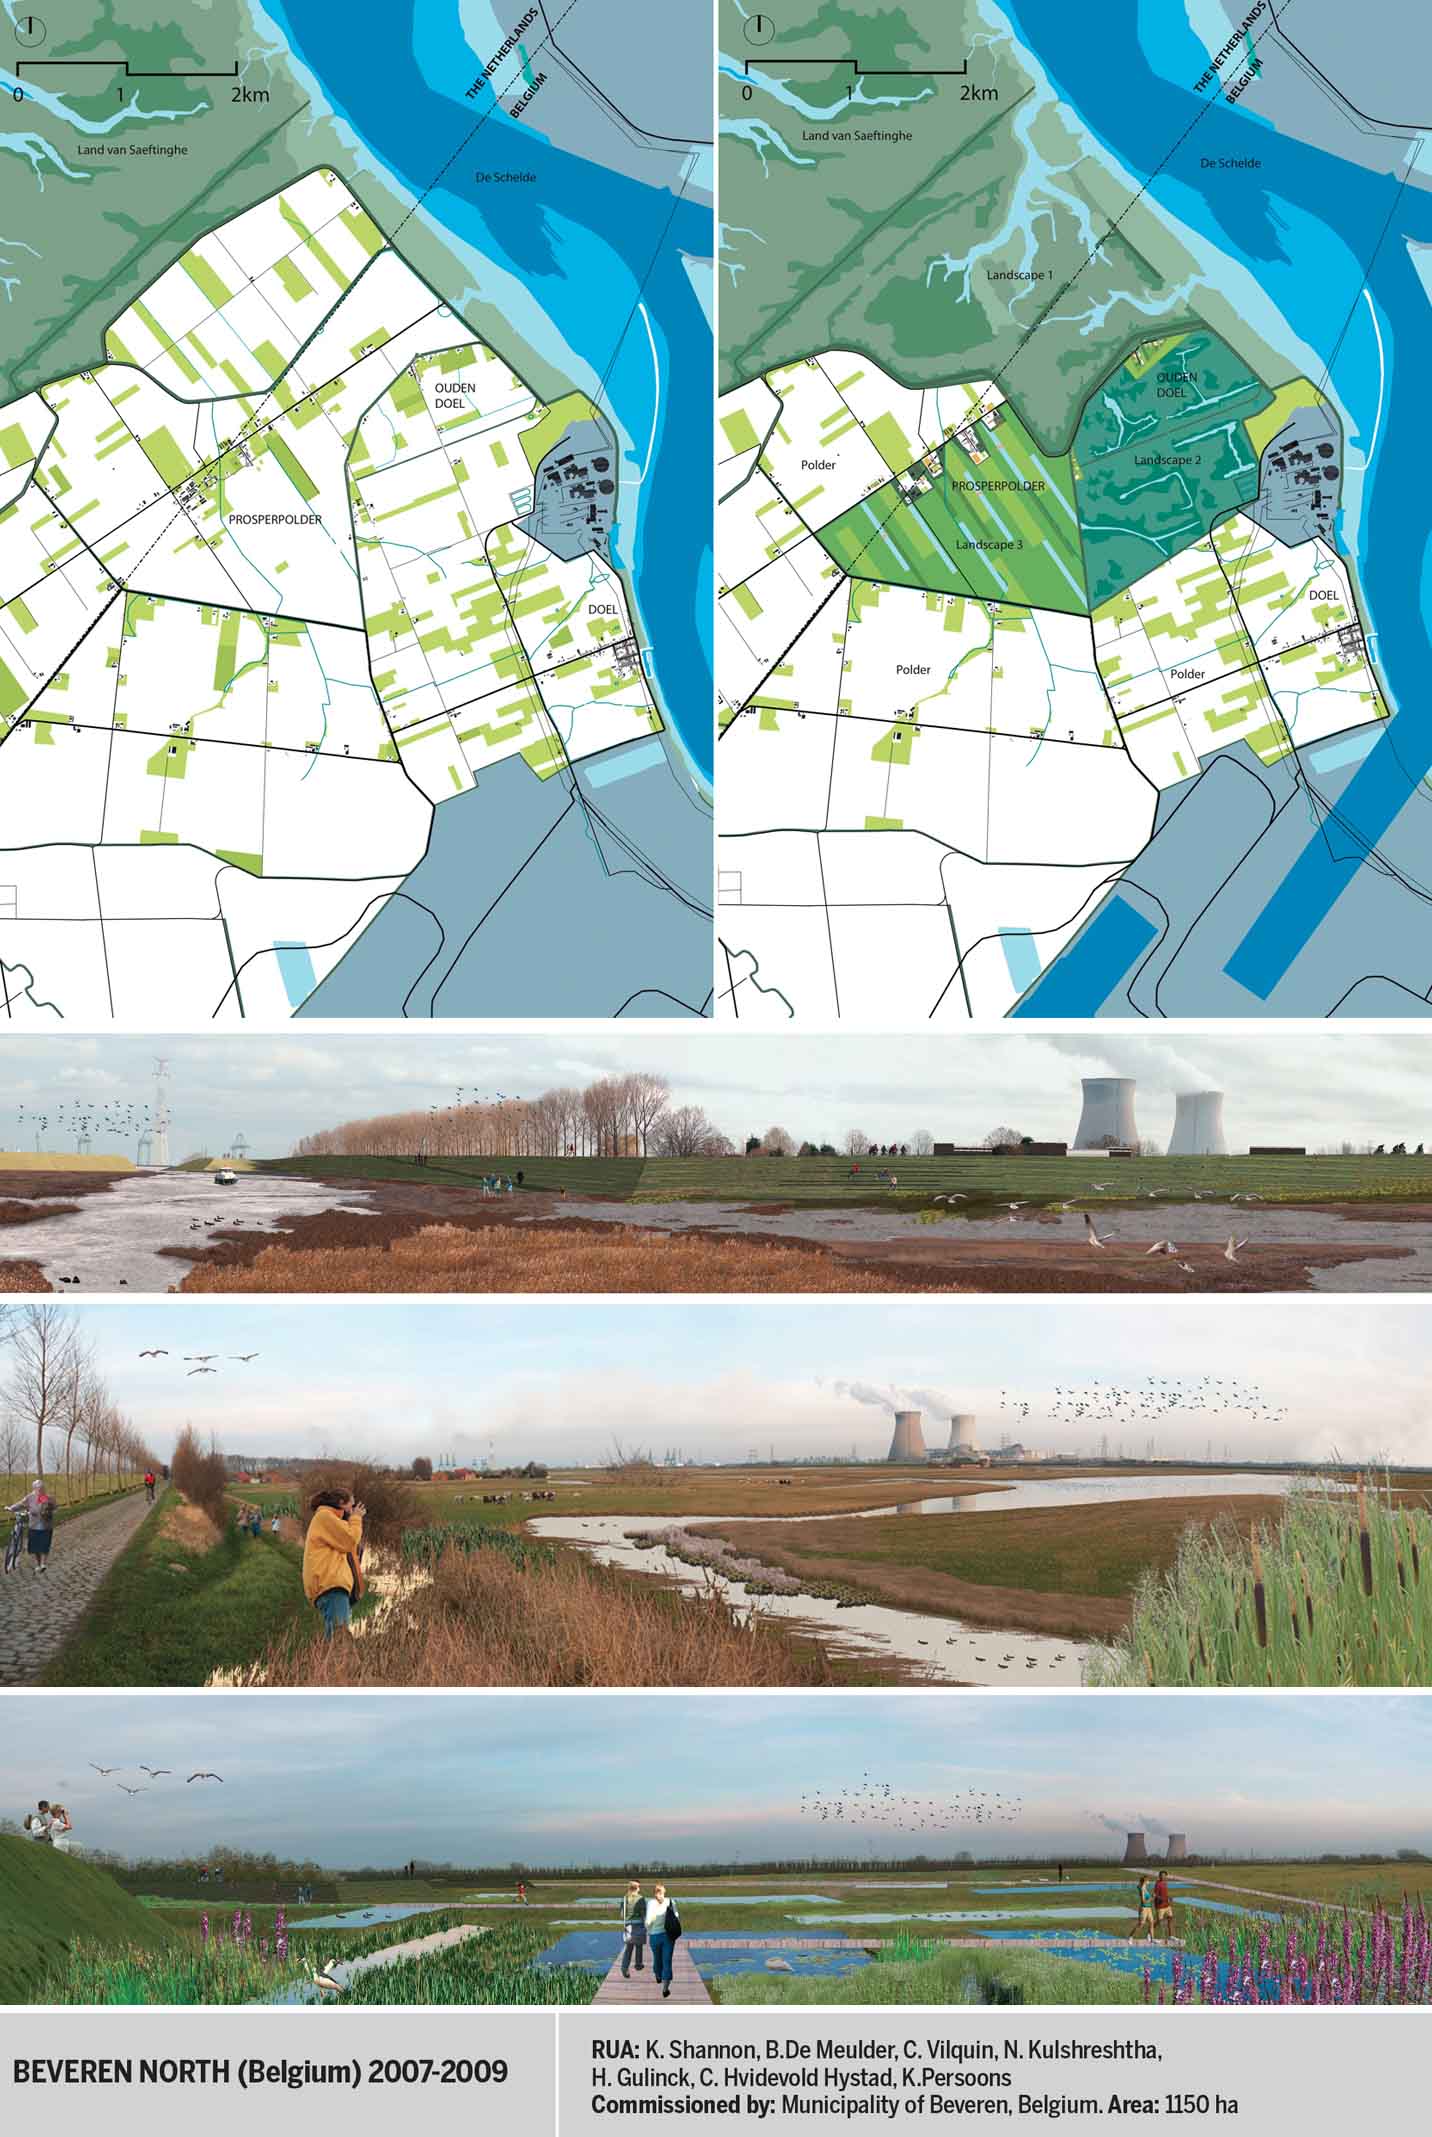 rua-projects-water-and-forest-urbanism-beveren-north-belgium-2007-2009-k-shannon-bdemeulder-cvilquin-nkulshreshtha-hgulinck-chvidevold-hystad-kpersoons-commissioned-municipality-area-1150-ha